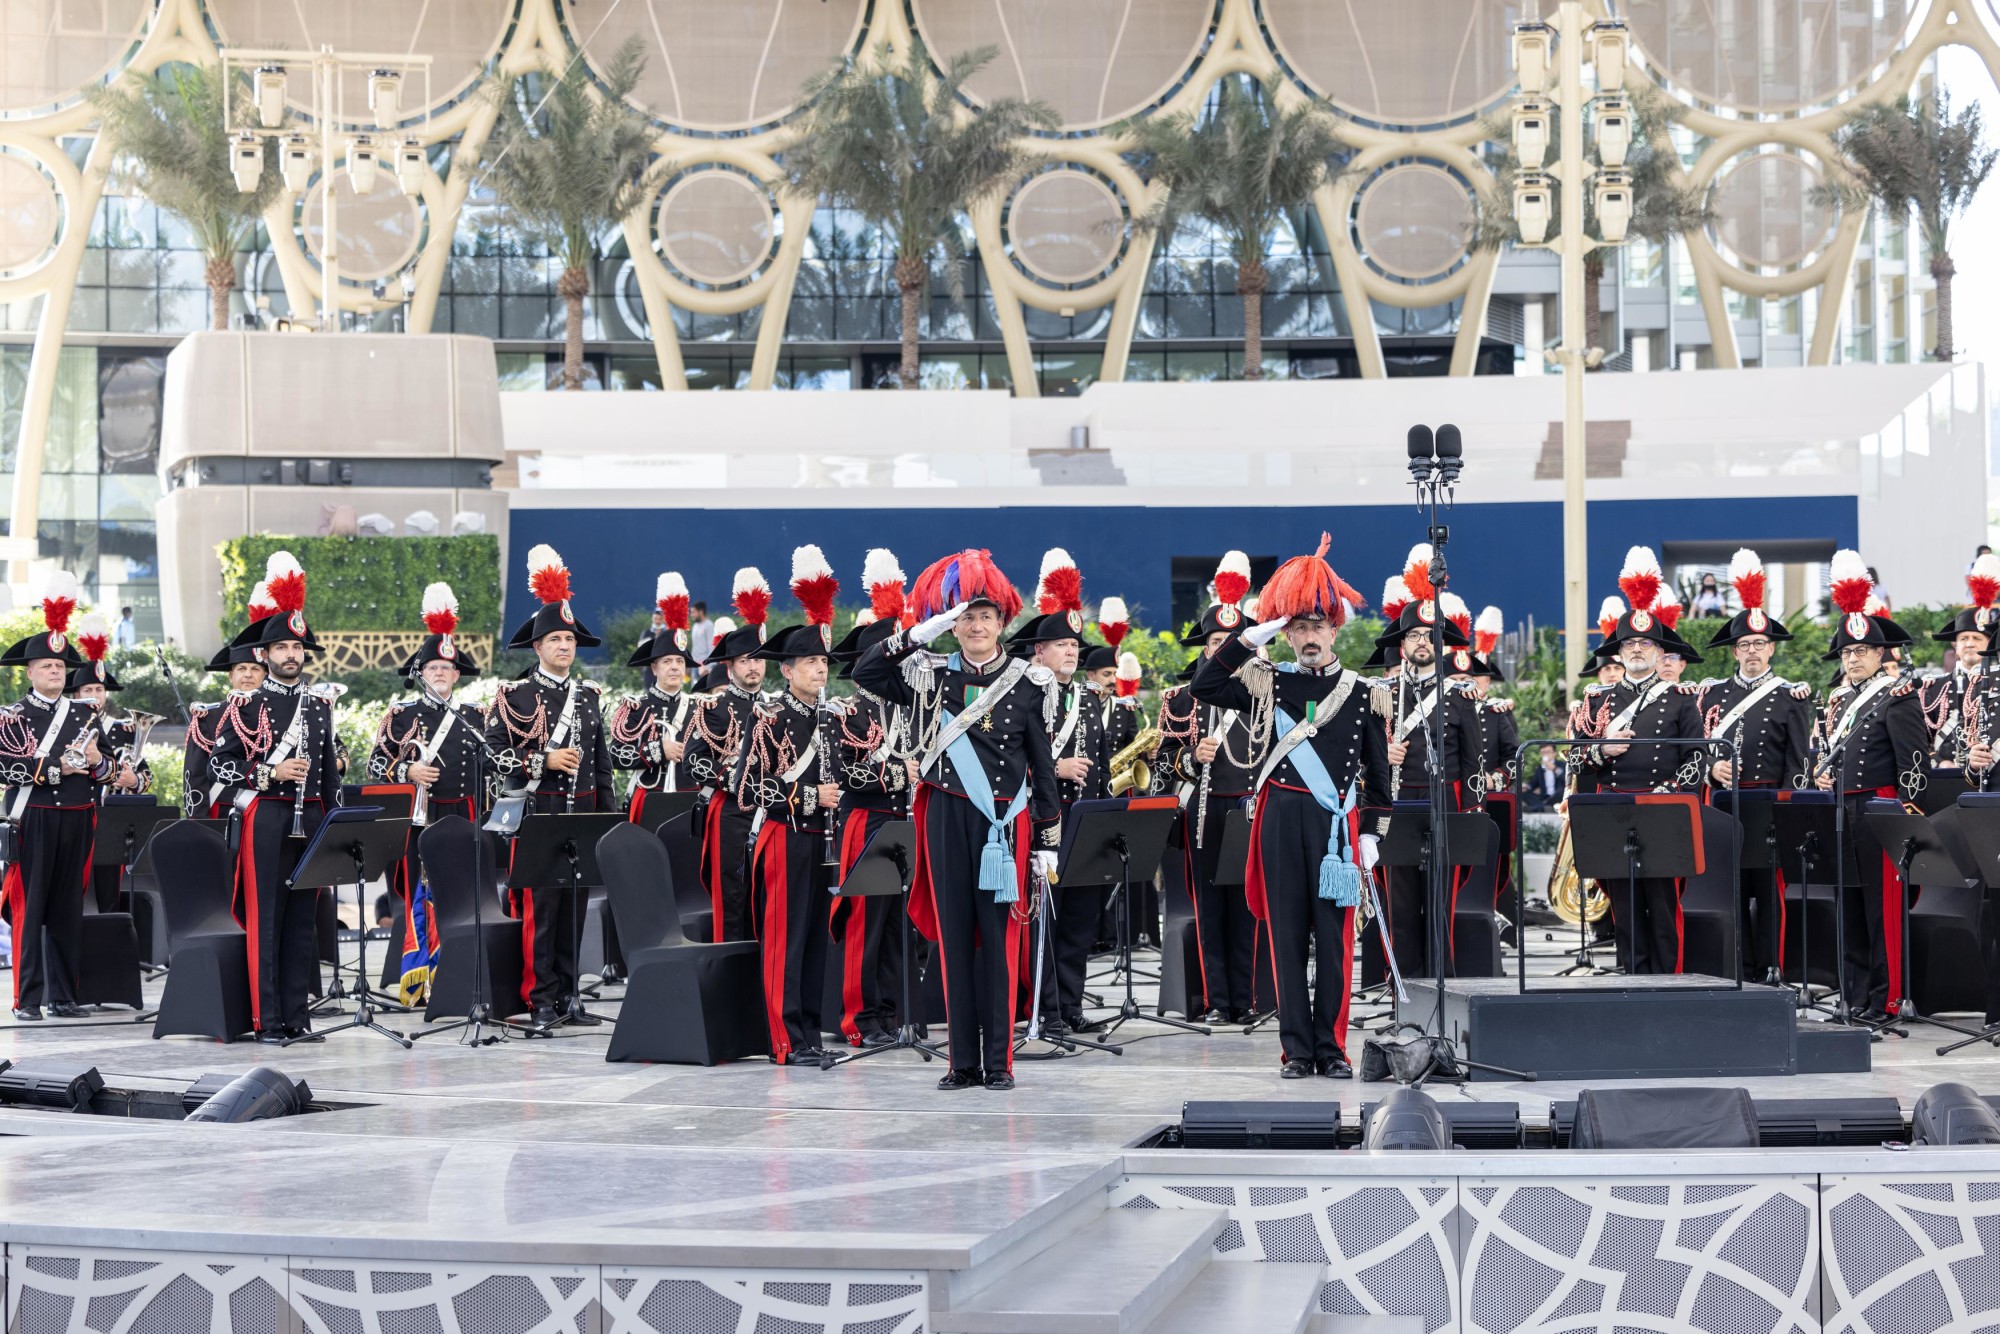 Marching Band Carabinieri during Italy National Day Cultural Performance at Al Wasl m13197